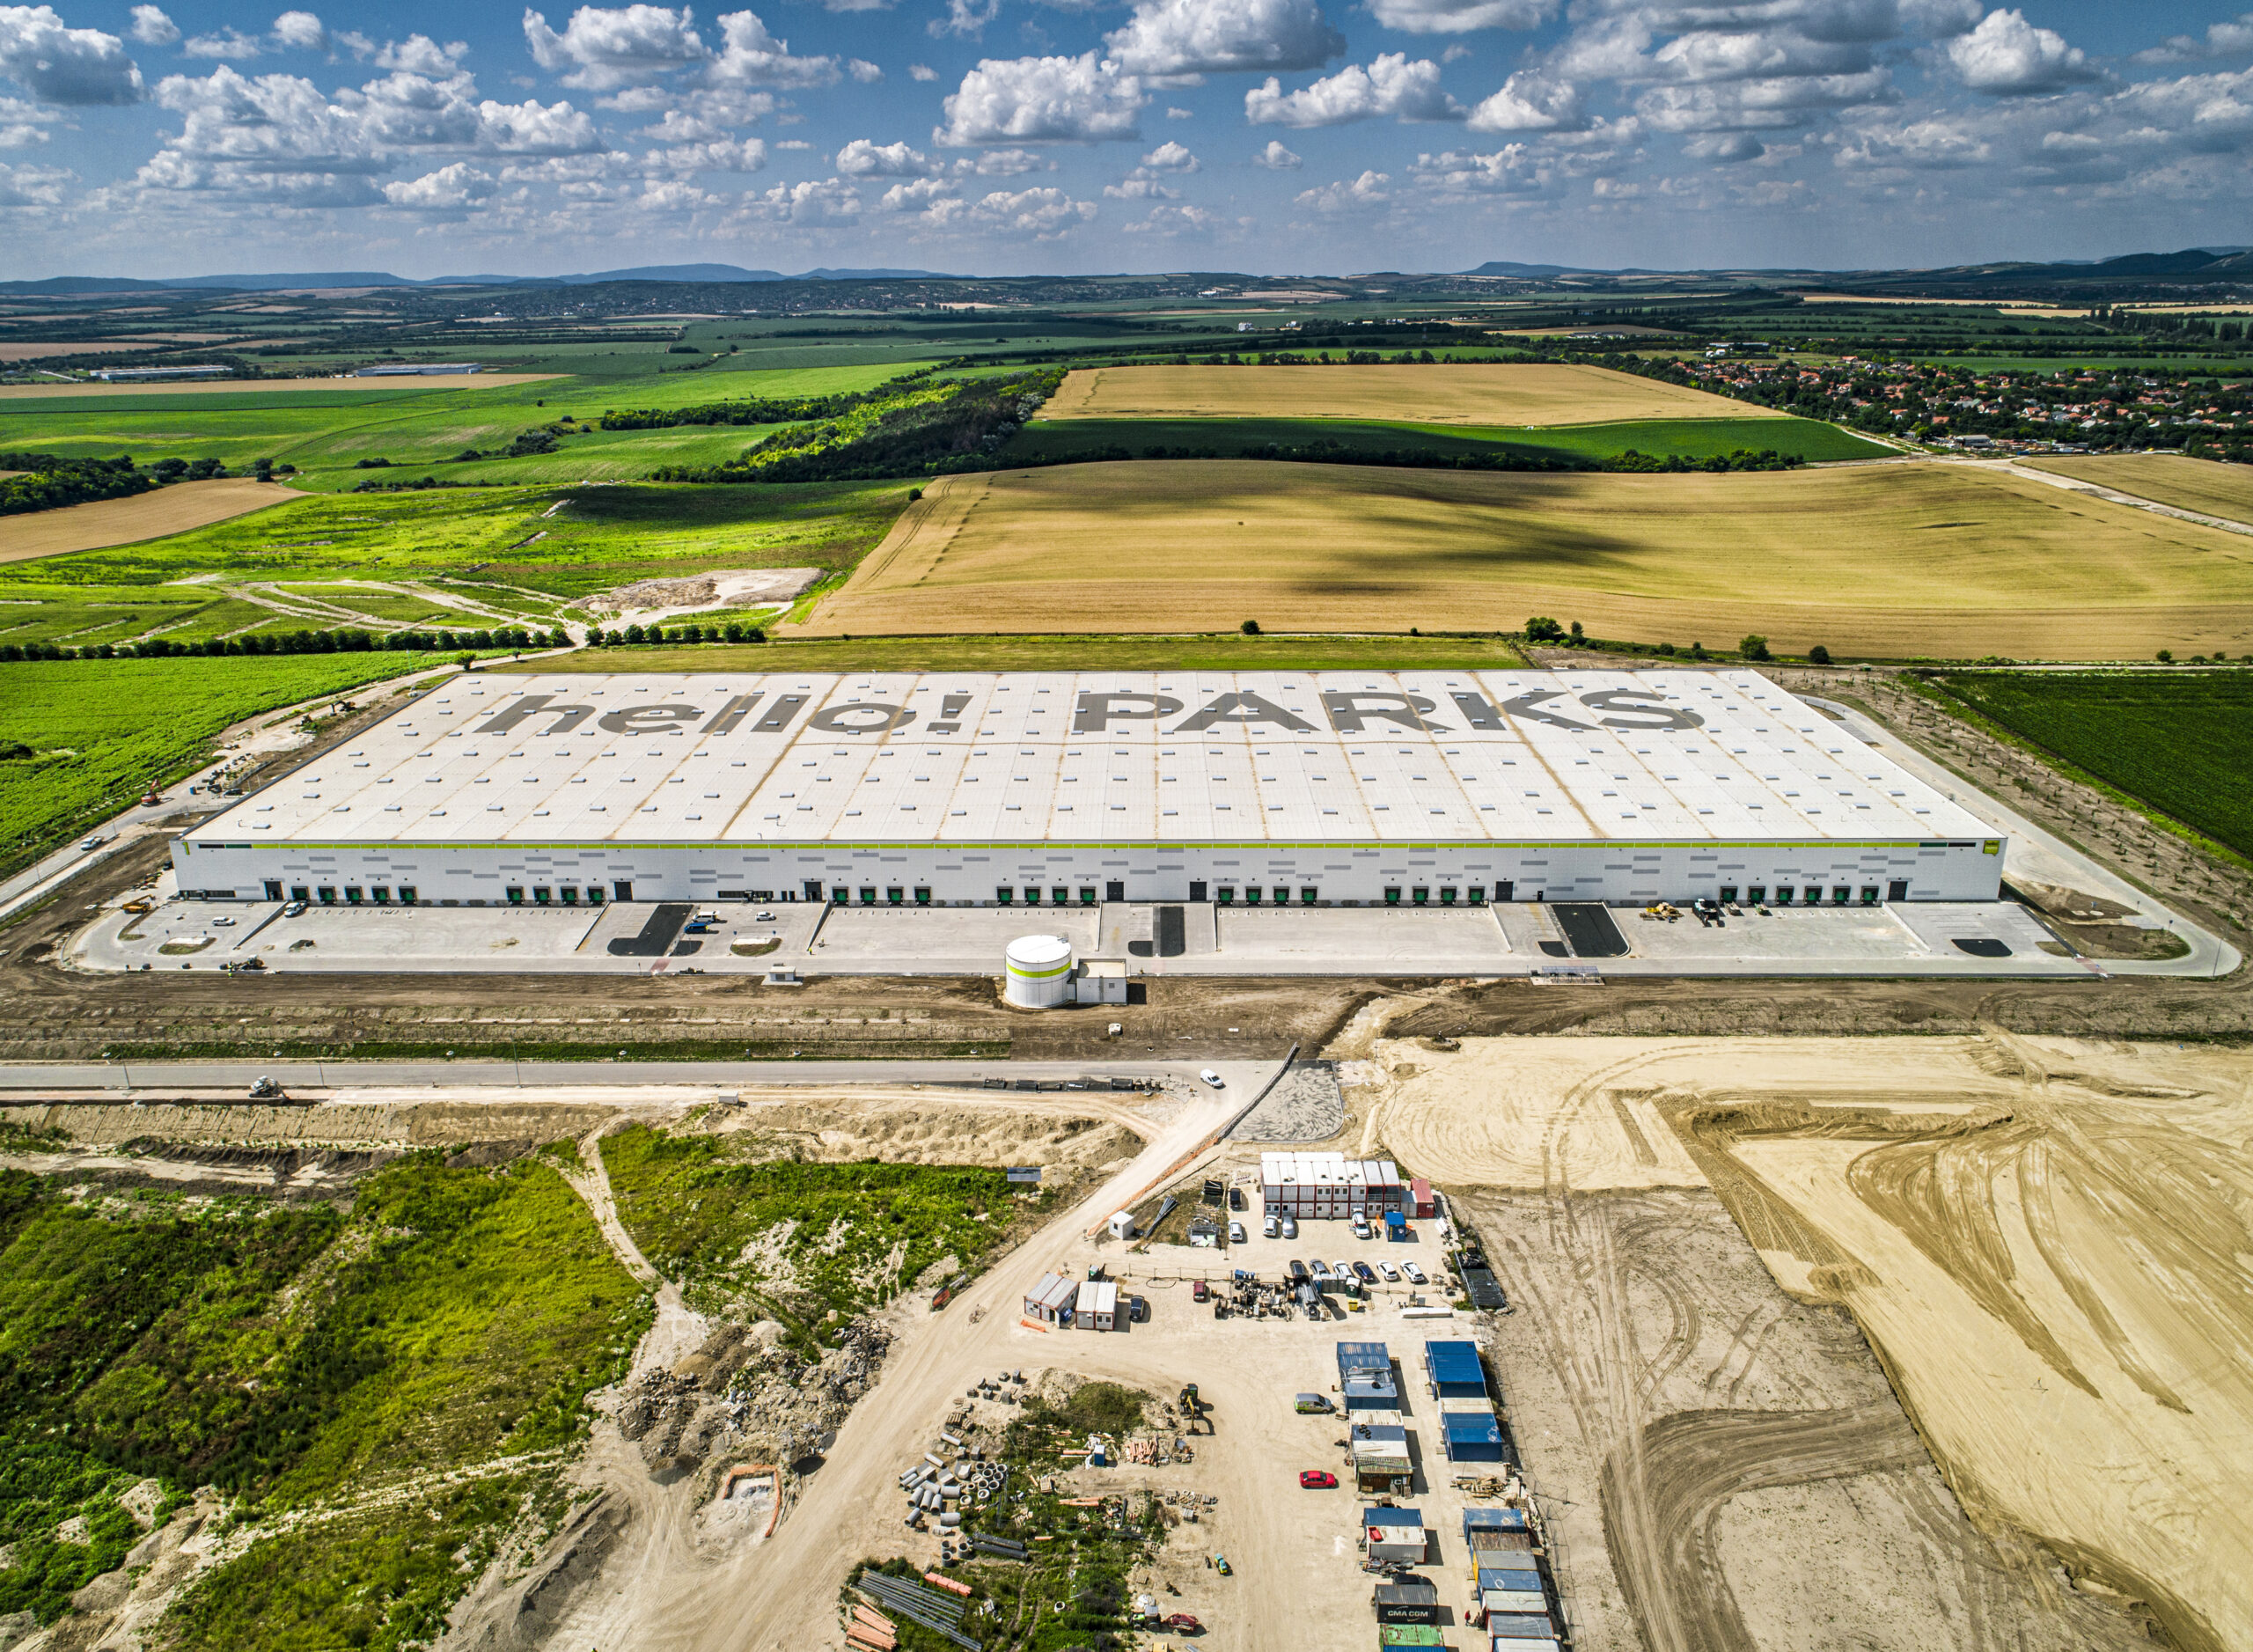 CIJEurope.com: HelloParks megapark in Páty to host new drogerie markt (dm) regional central warehouse